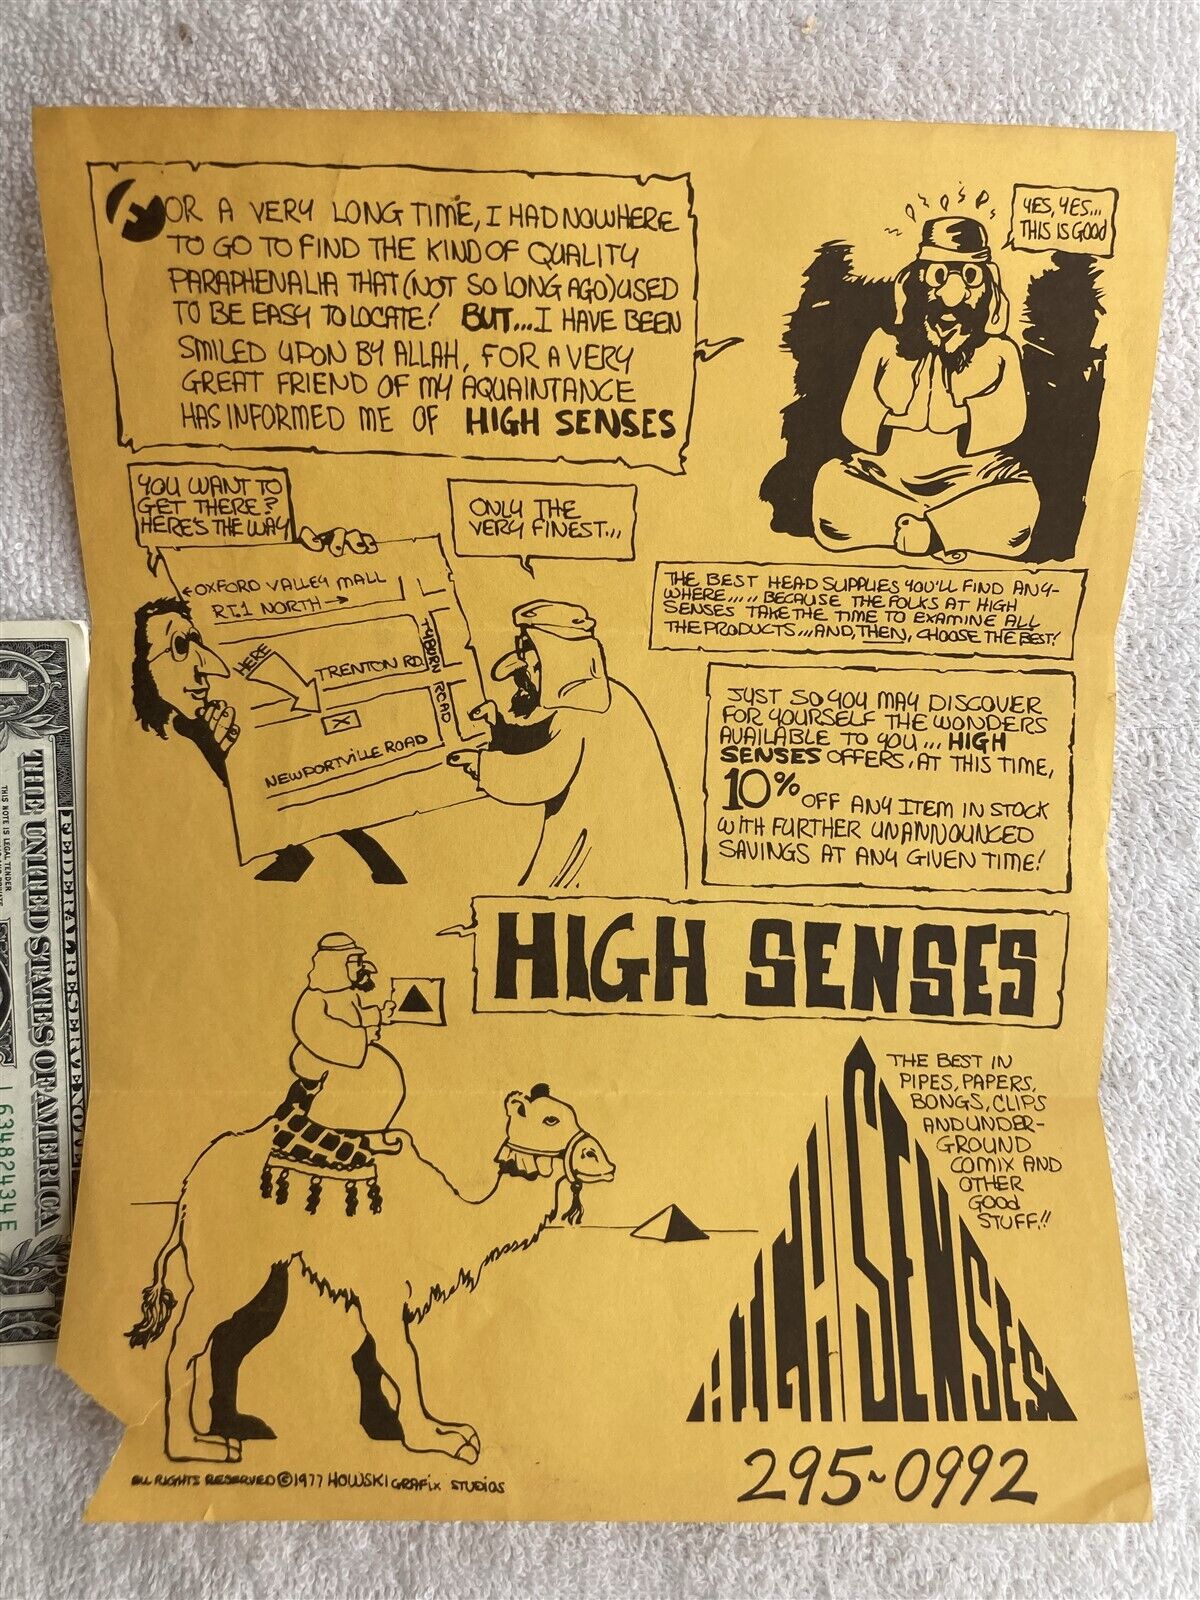 1977 High Senses Marijuana Pipes Store Flier Levittown Fairless Hills PA Vintage